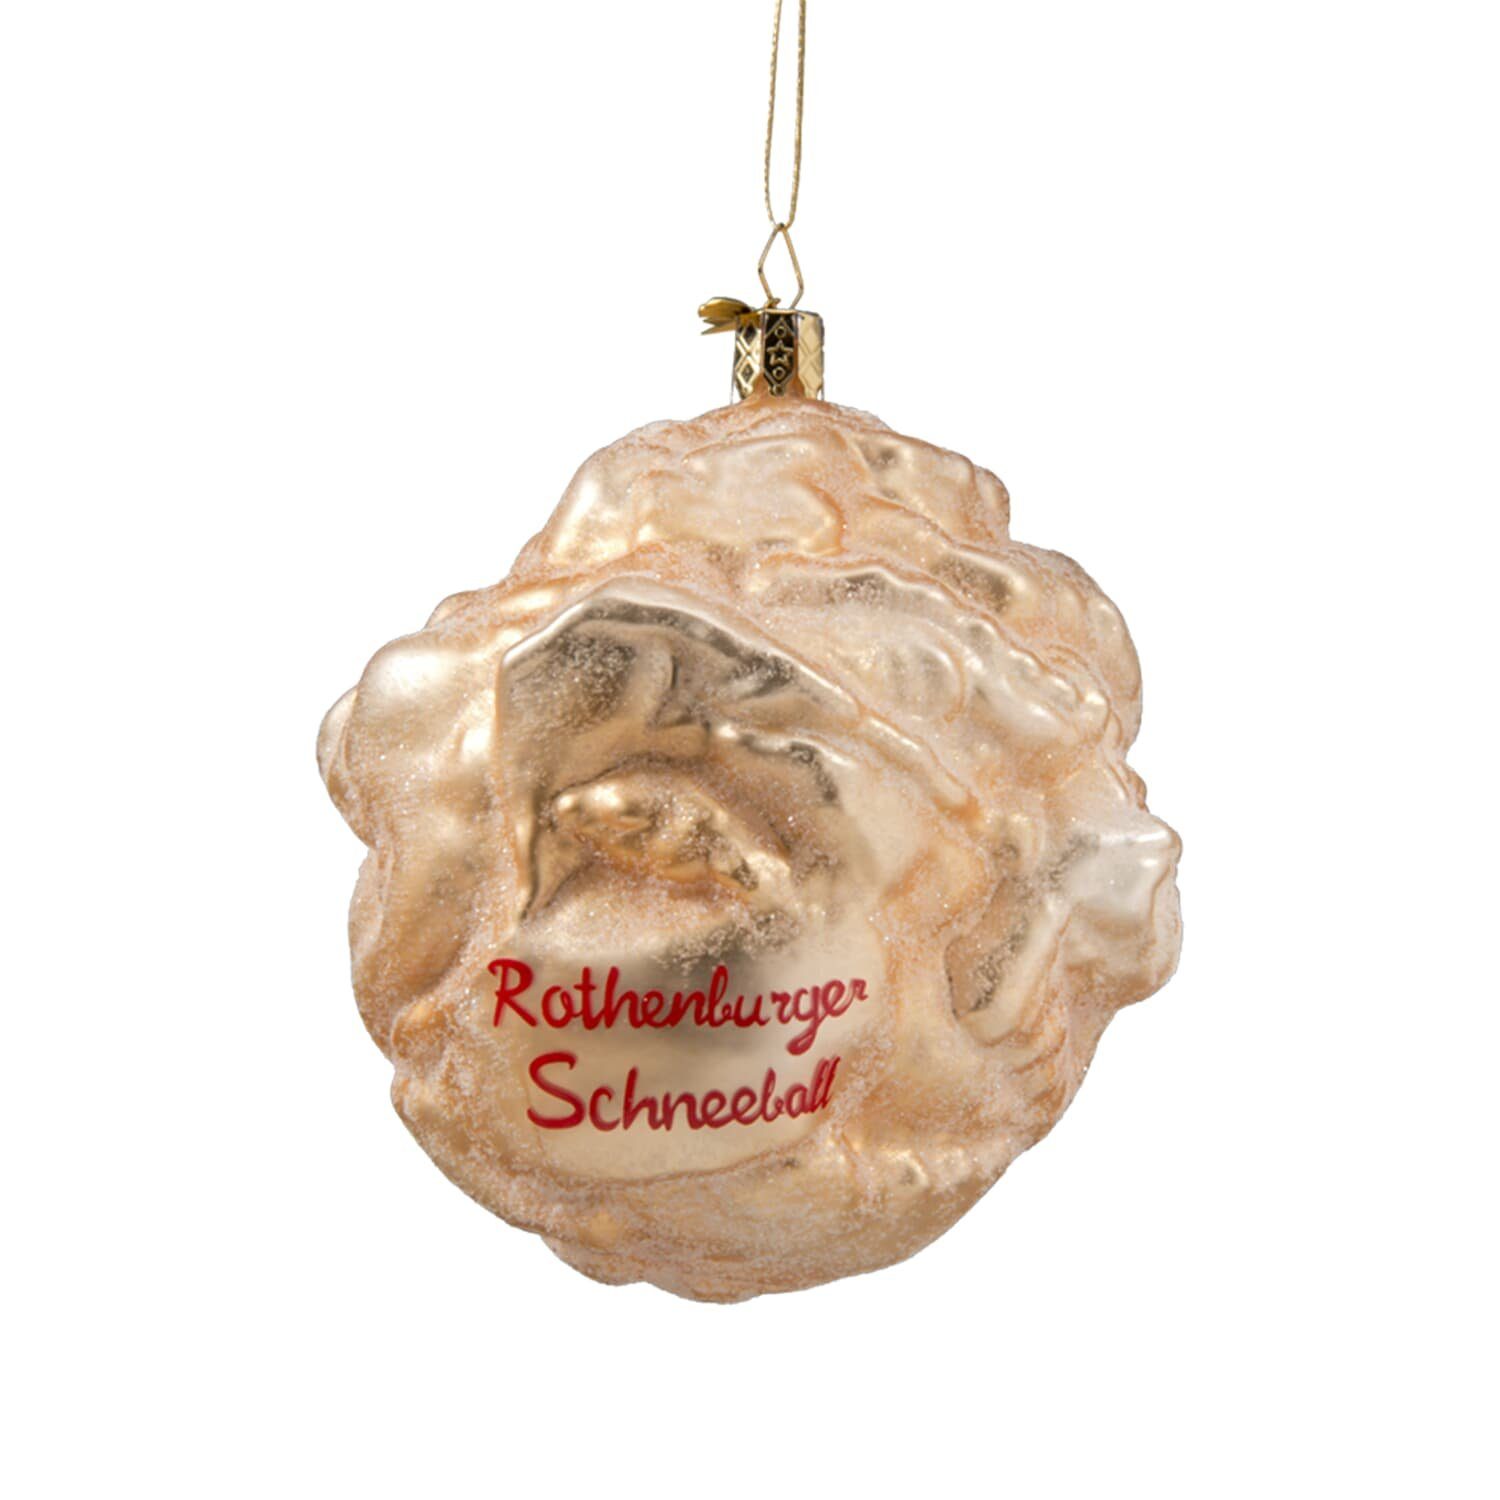 Rothenburger Glasbaumbehang Käthe Schneeballen Christbaumschmuck Wohlfahrt